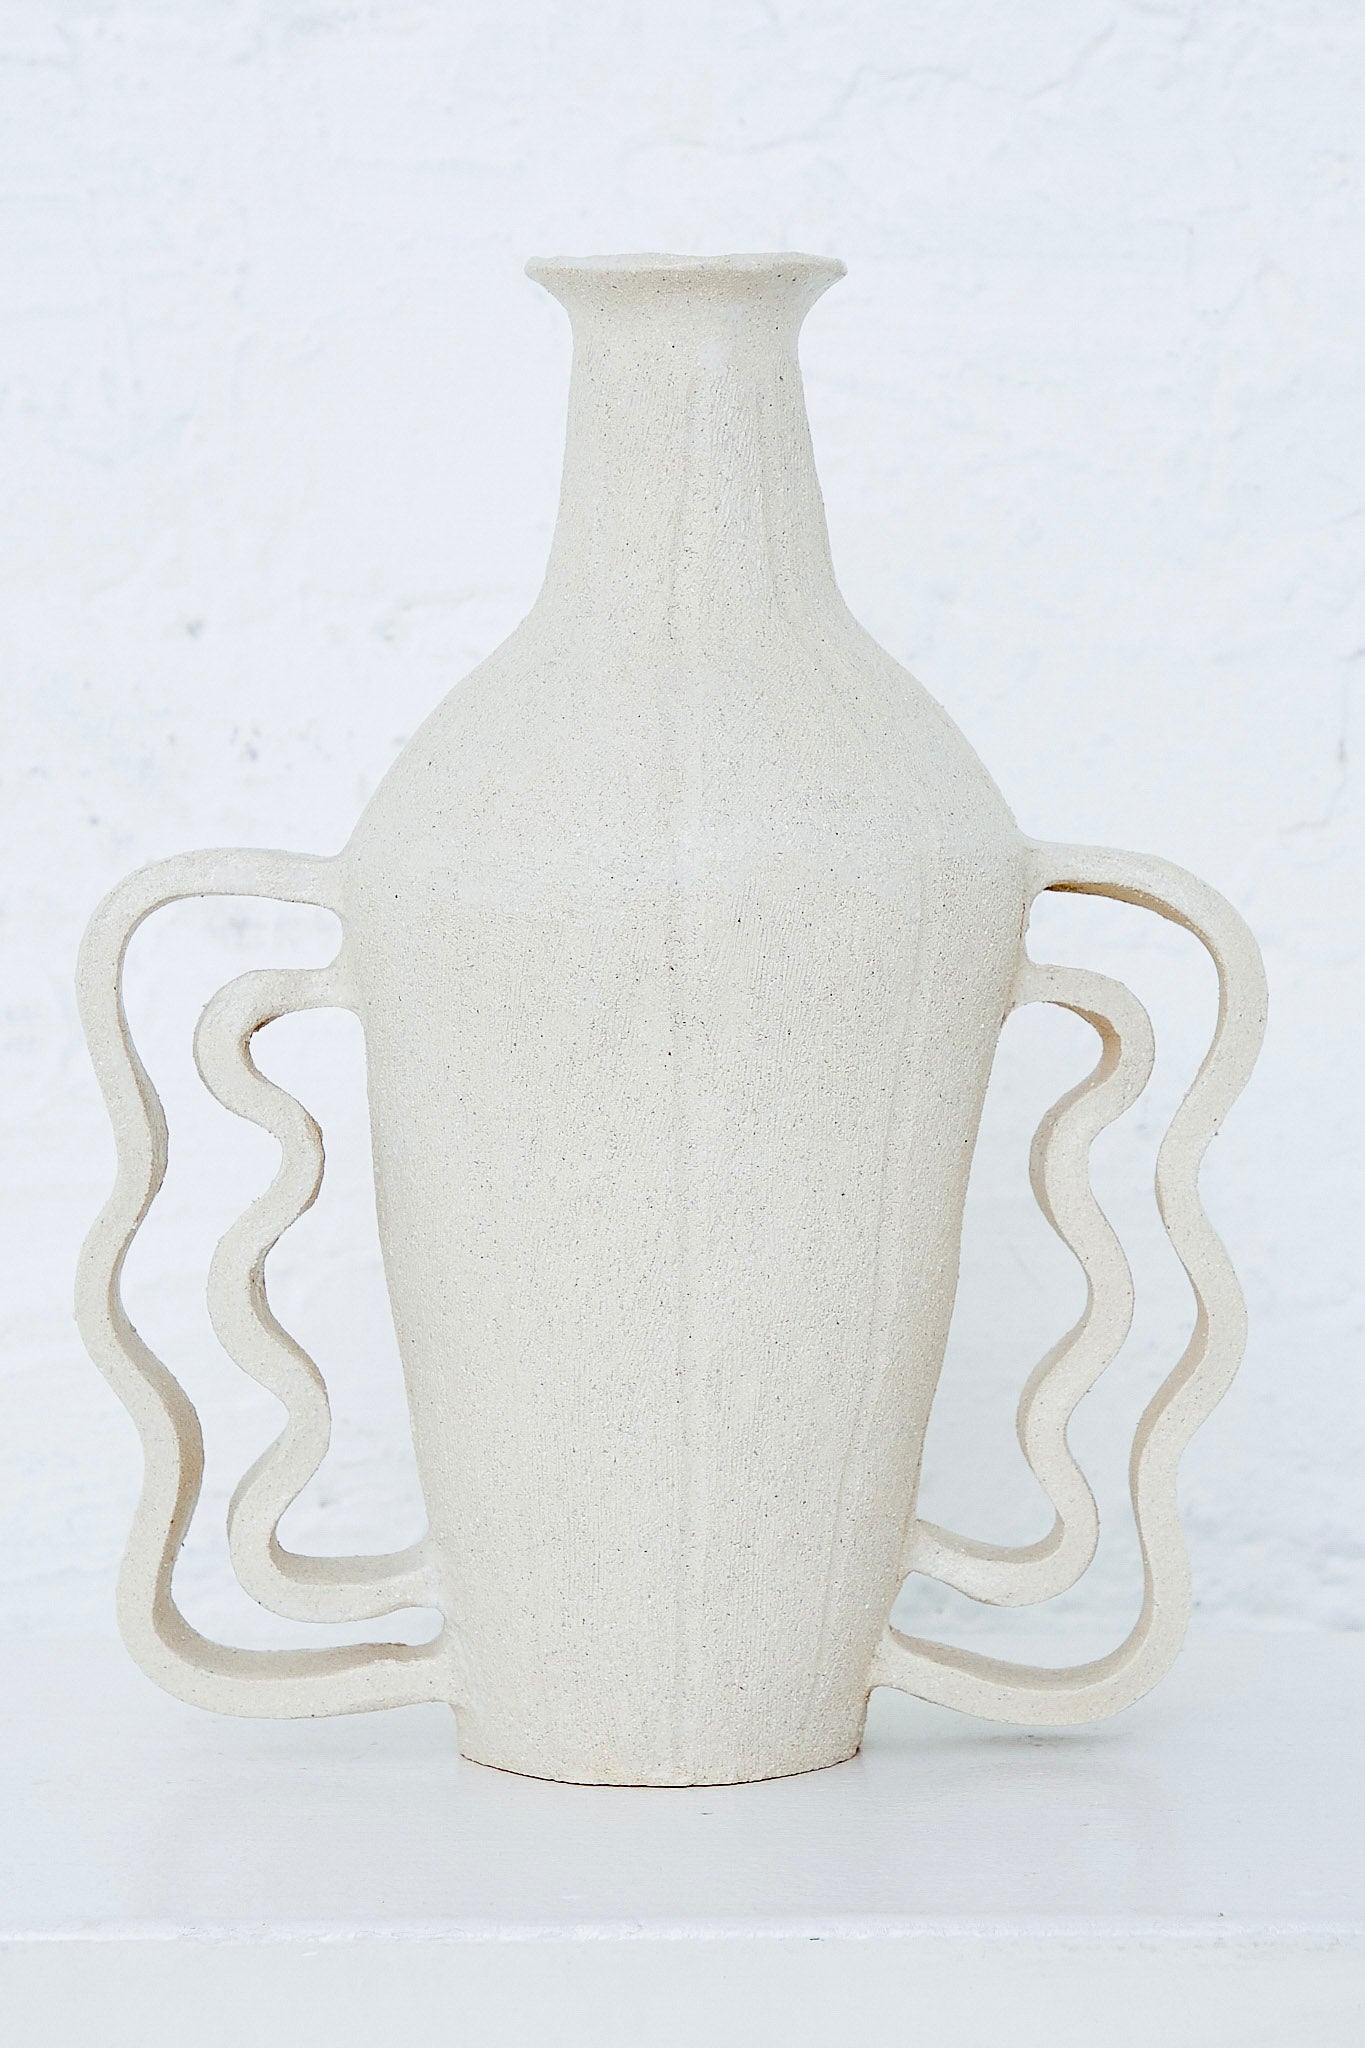 A Clandestine Amphora Le Grand Doubles Vagues white ceramic vase on a white table.